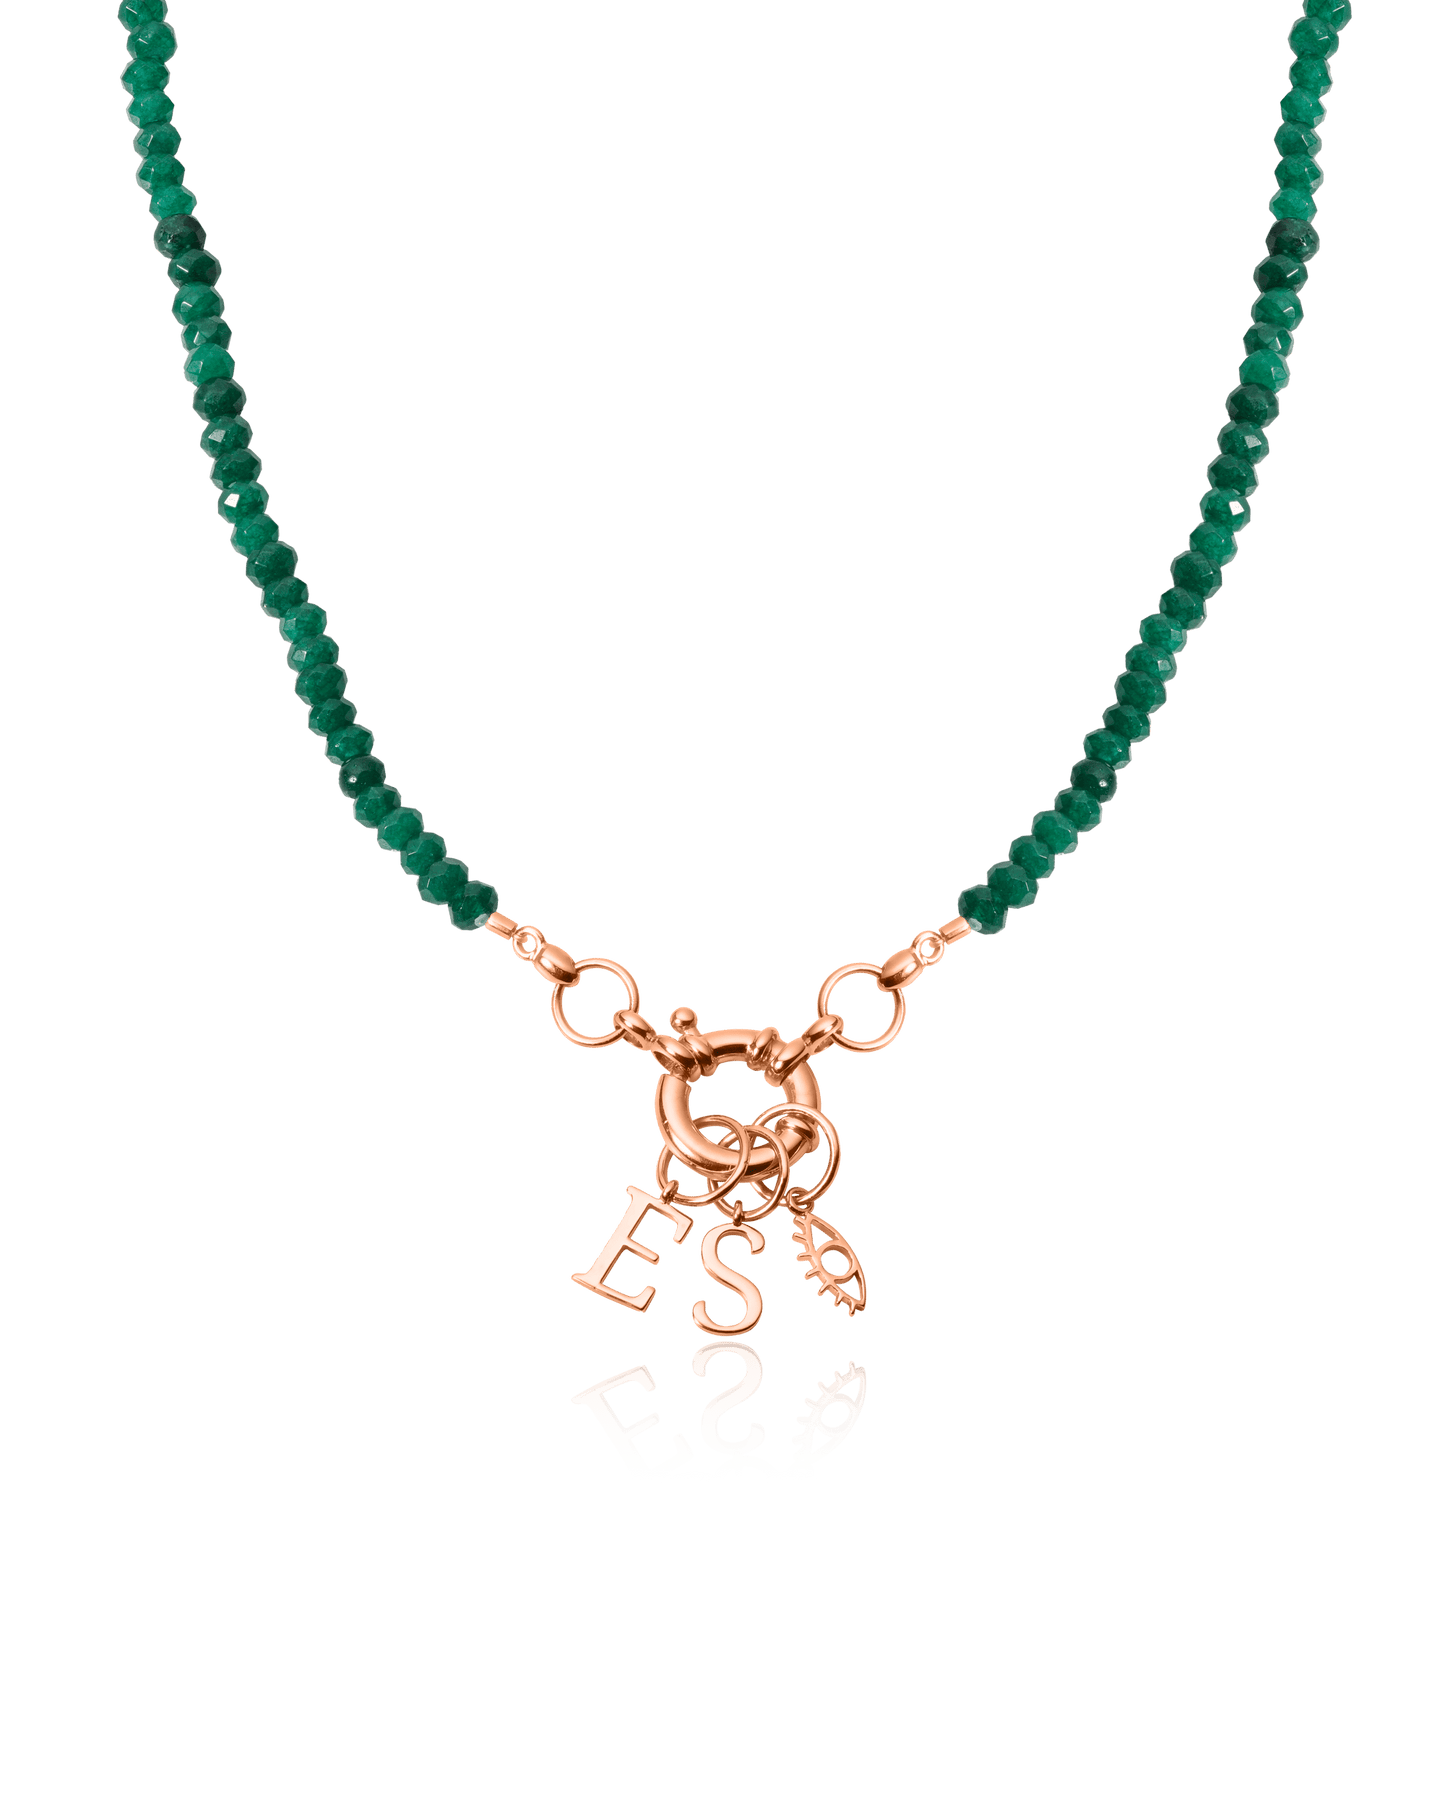 Watermelon Charm Lock Necklace - 18K Rose Vermeil Necklaces magal-dev Green Jade Gemstones 1 Charm 16"